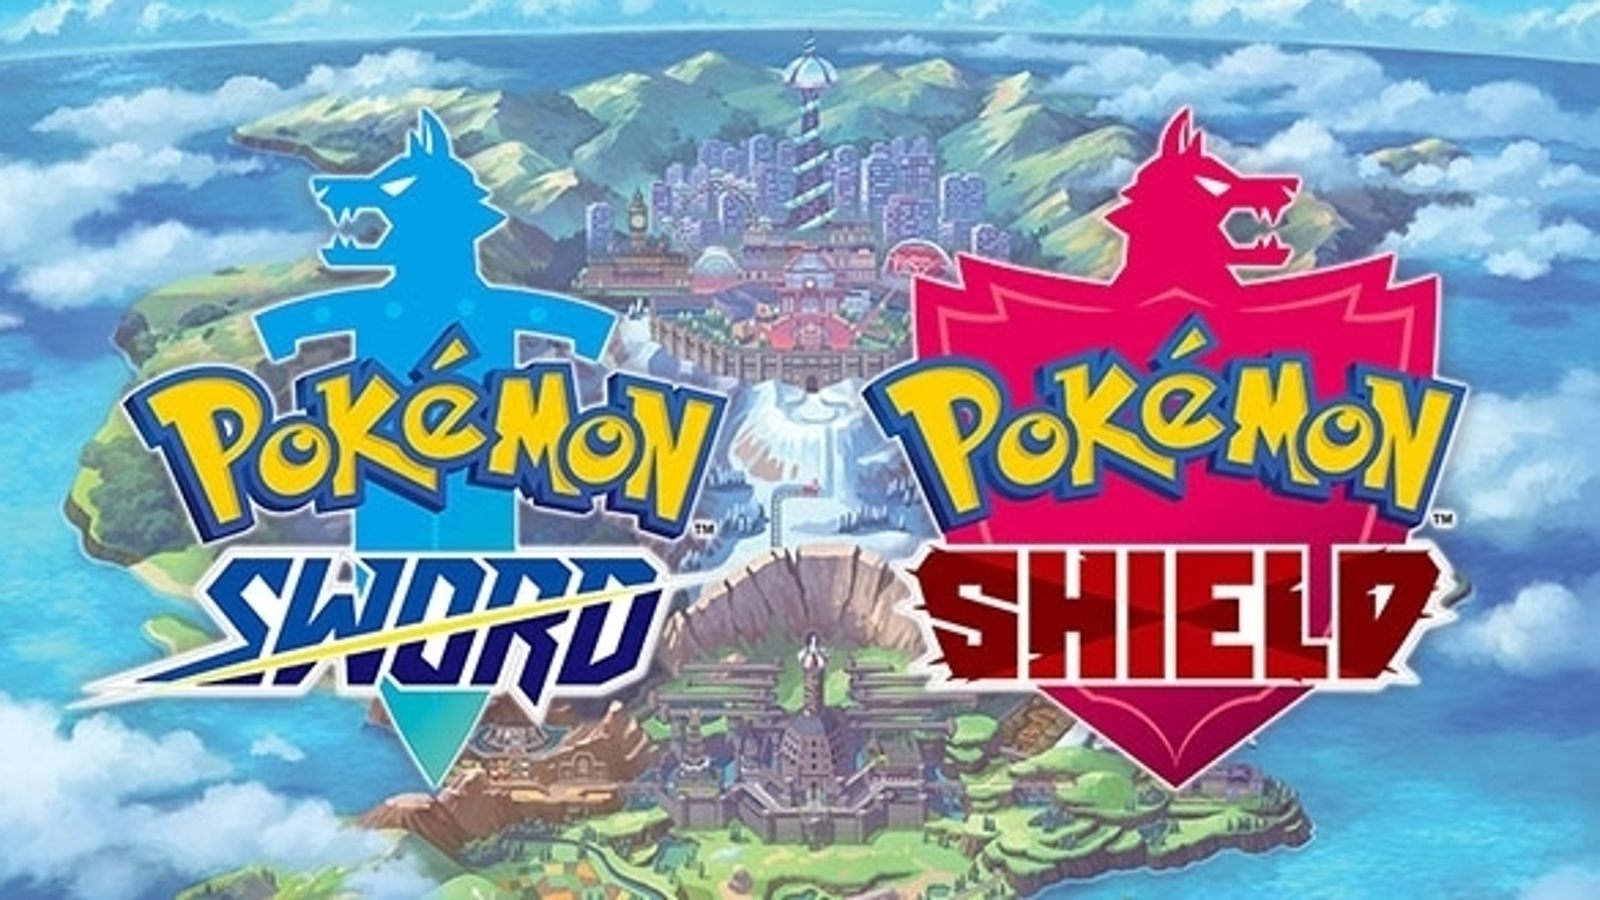 Pokémon Sword and Shield' Producer Explains Limited Pokémon